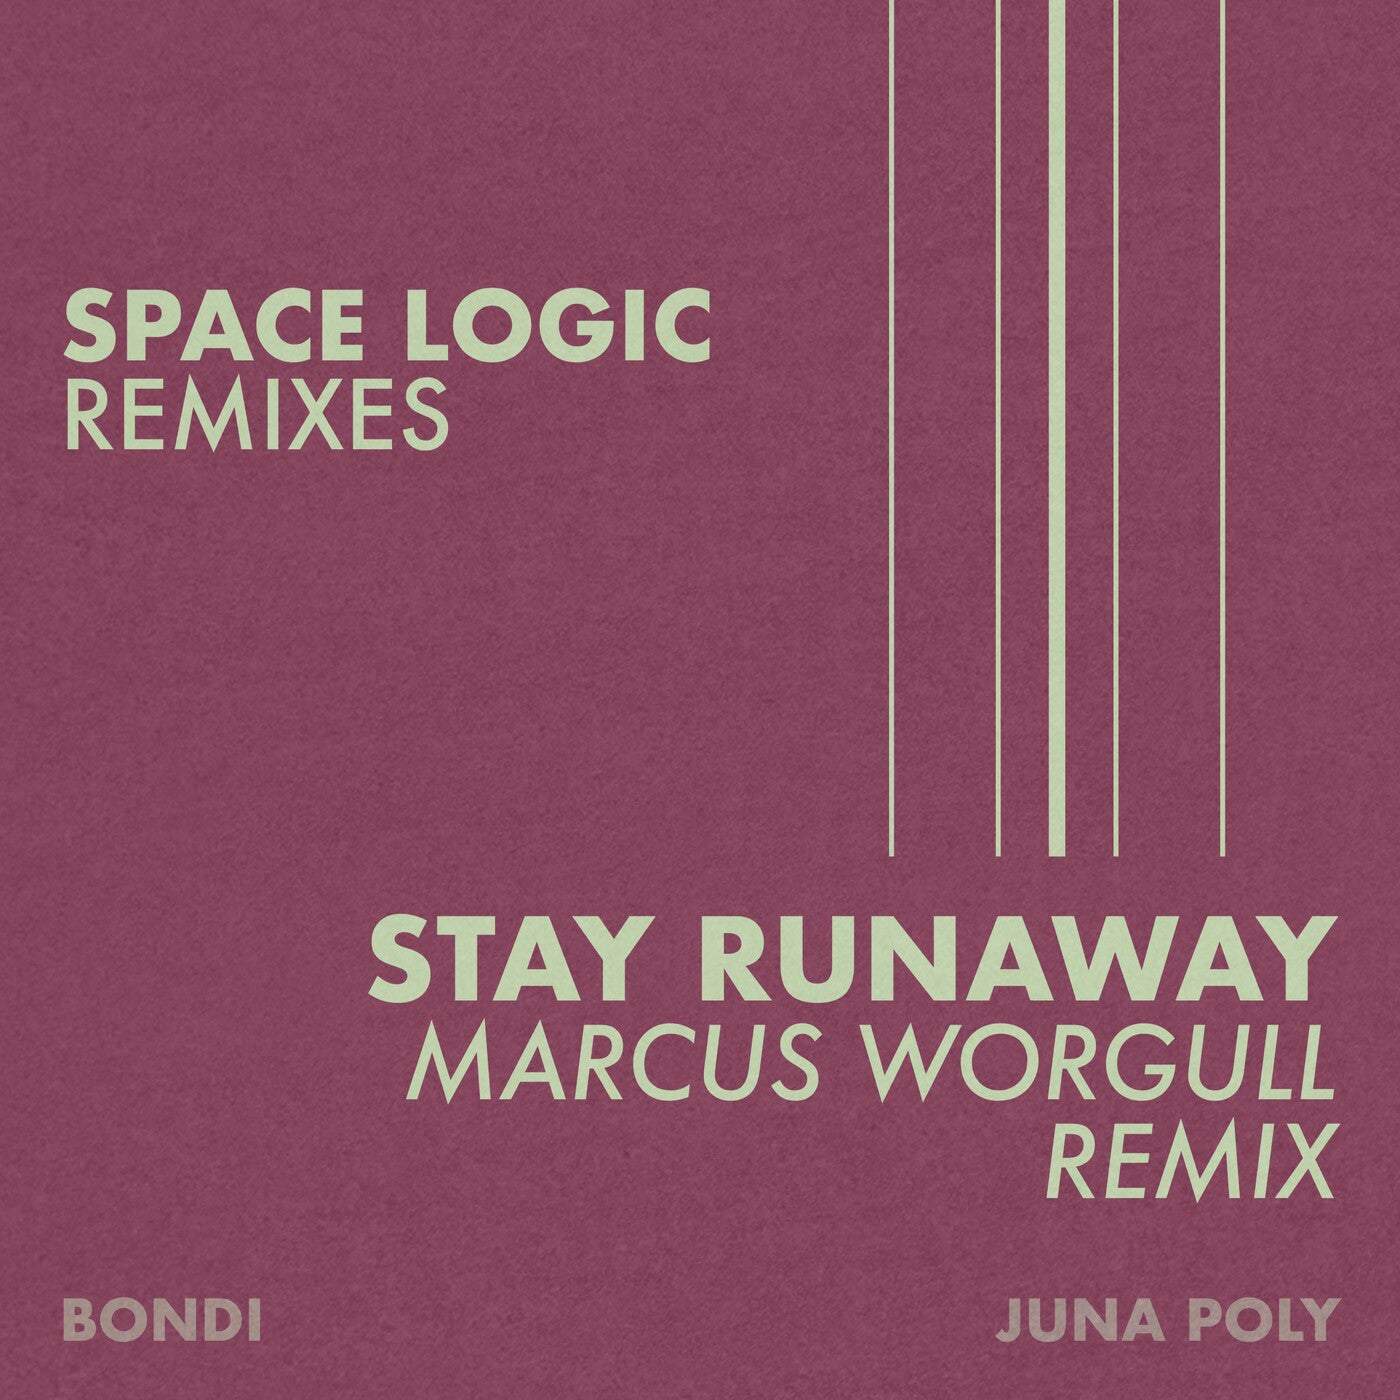 Download BONDI - Stay Runaway (Marcus Worgull Remix) on Electrobuzz